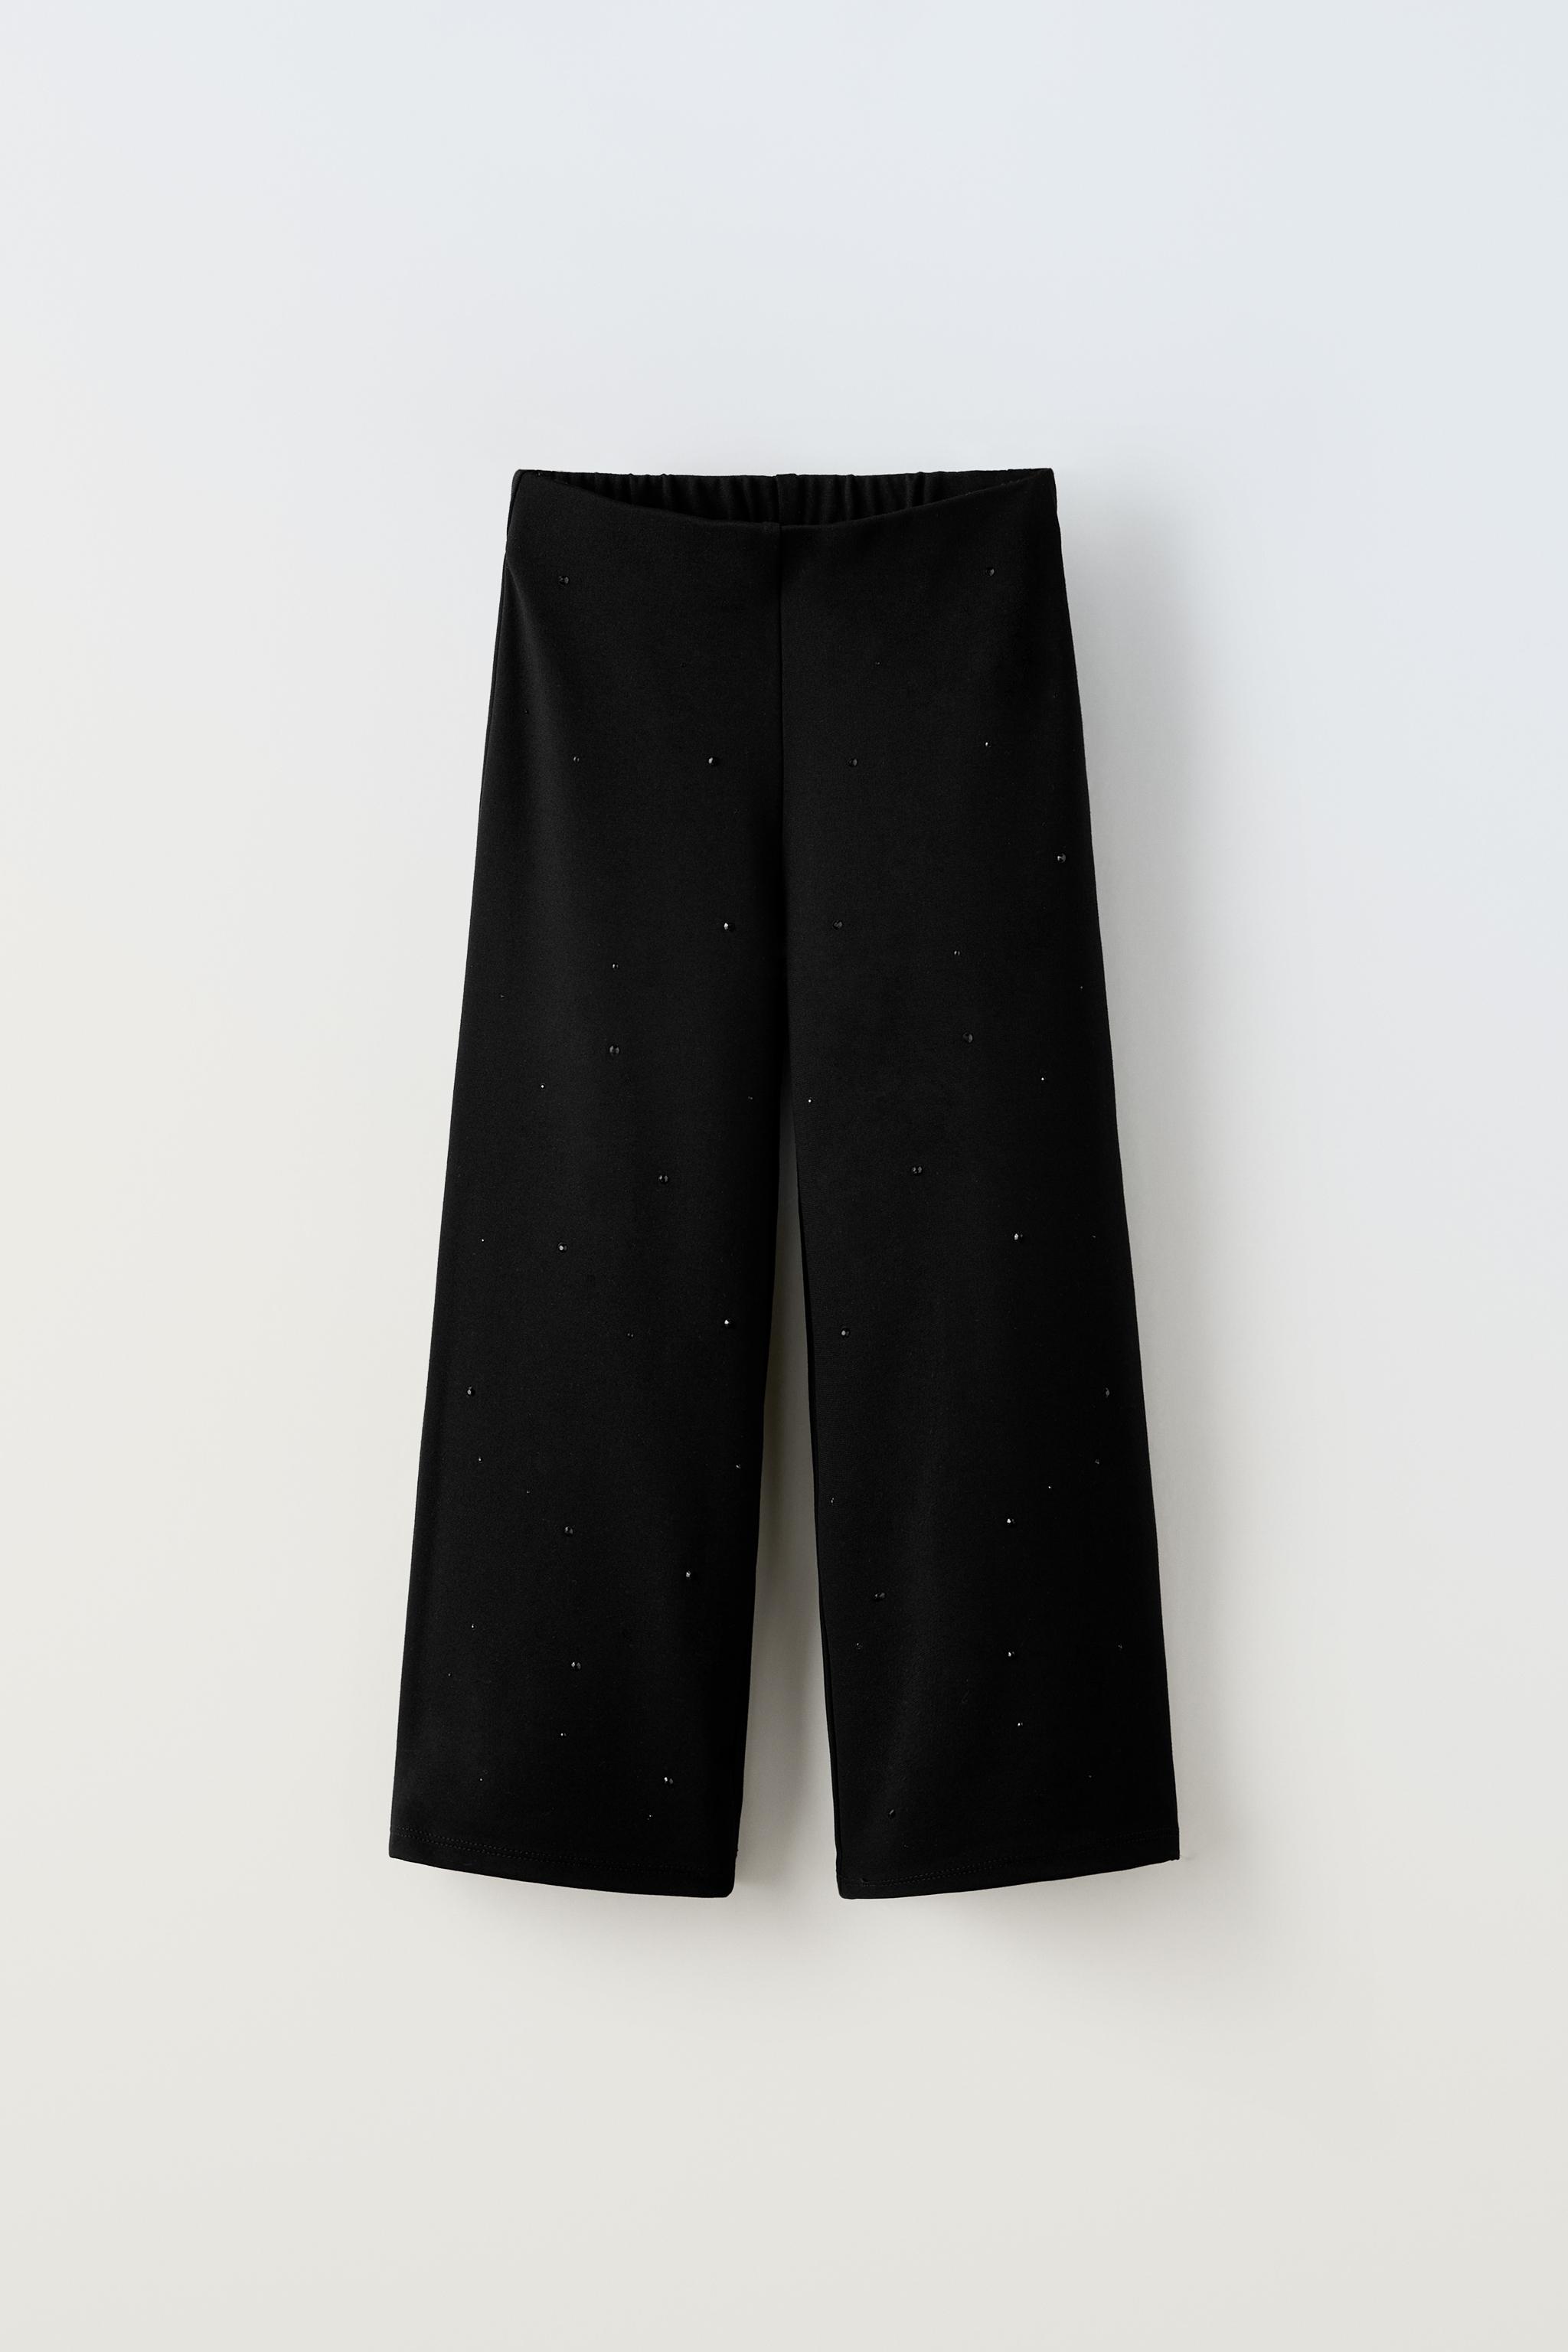 Zara black crochet hem pants, Women's Fashion, Bottoms, Other